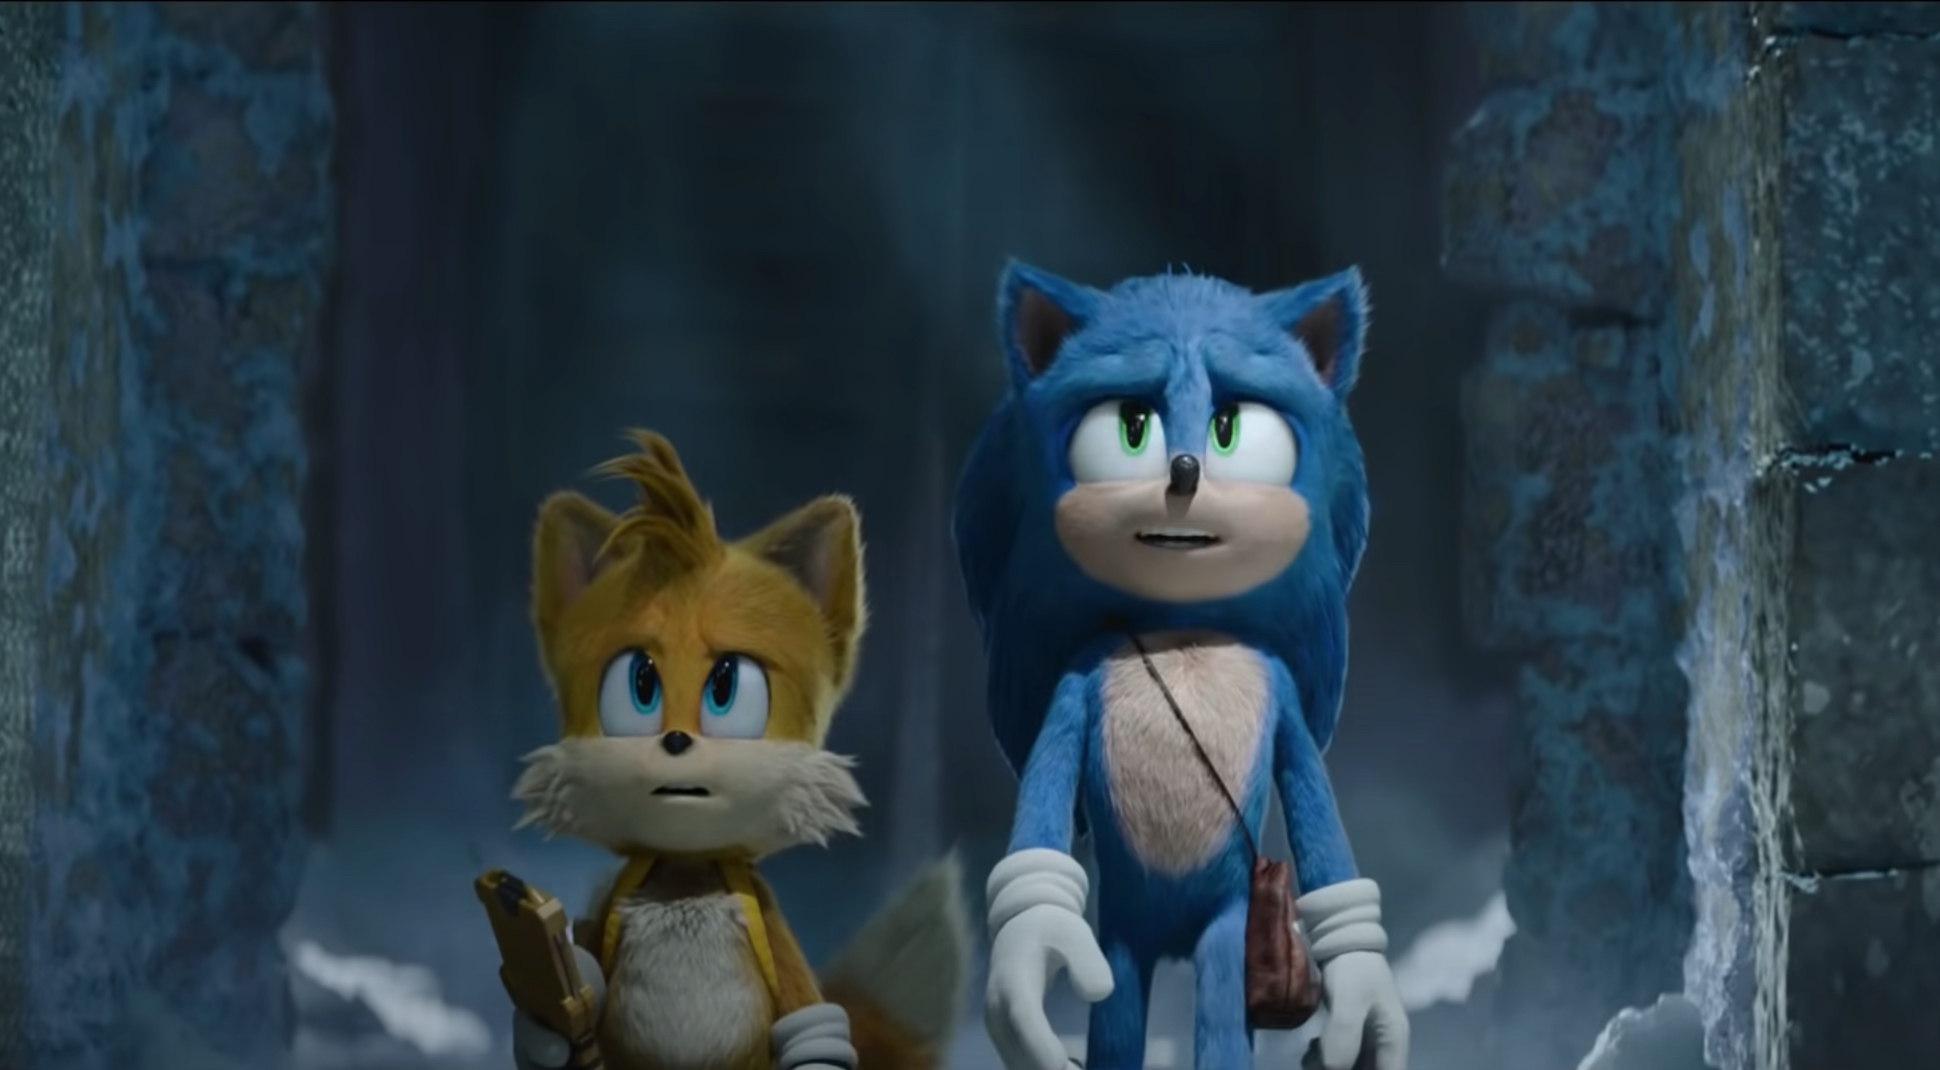 Sonic The Hedgehog 2: Final Trailer Released Online